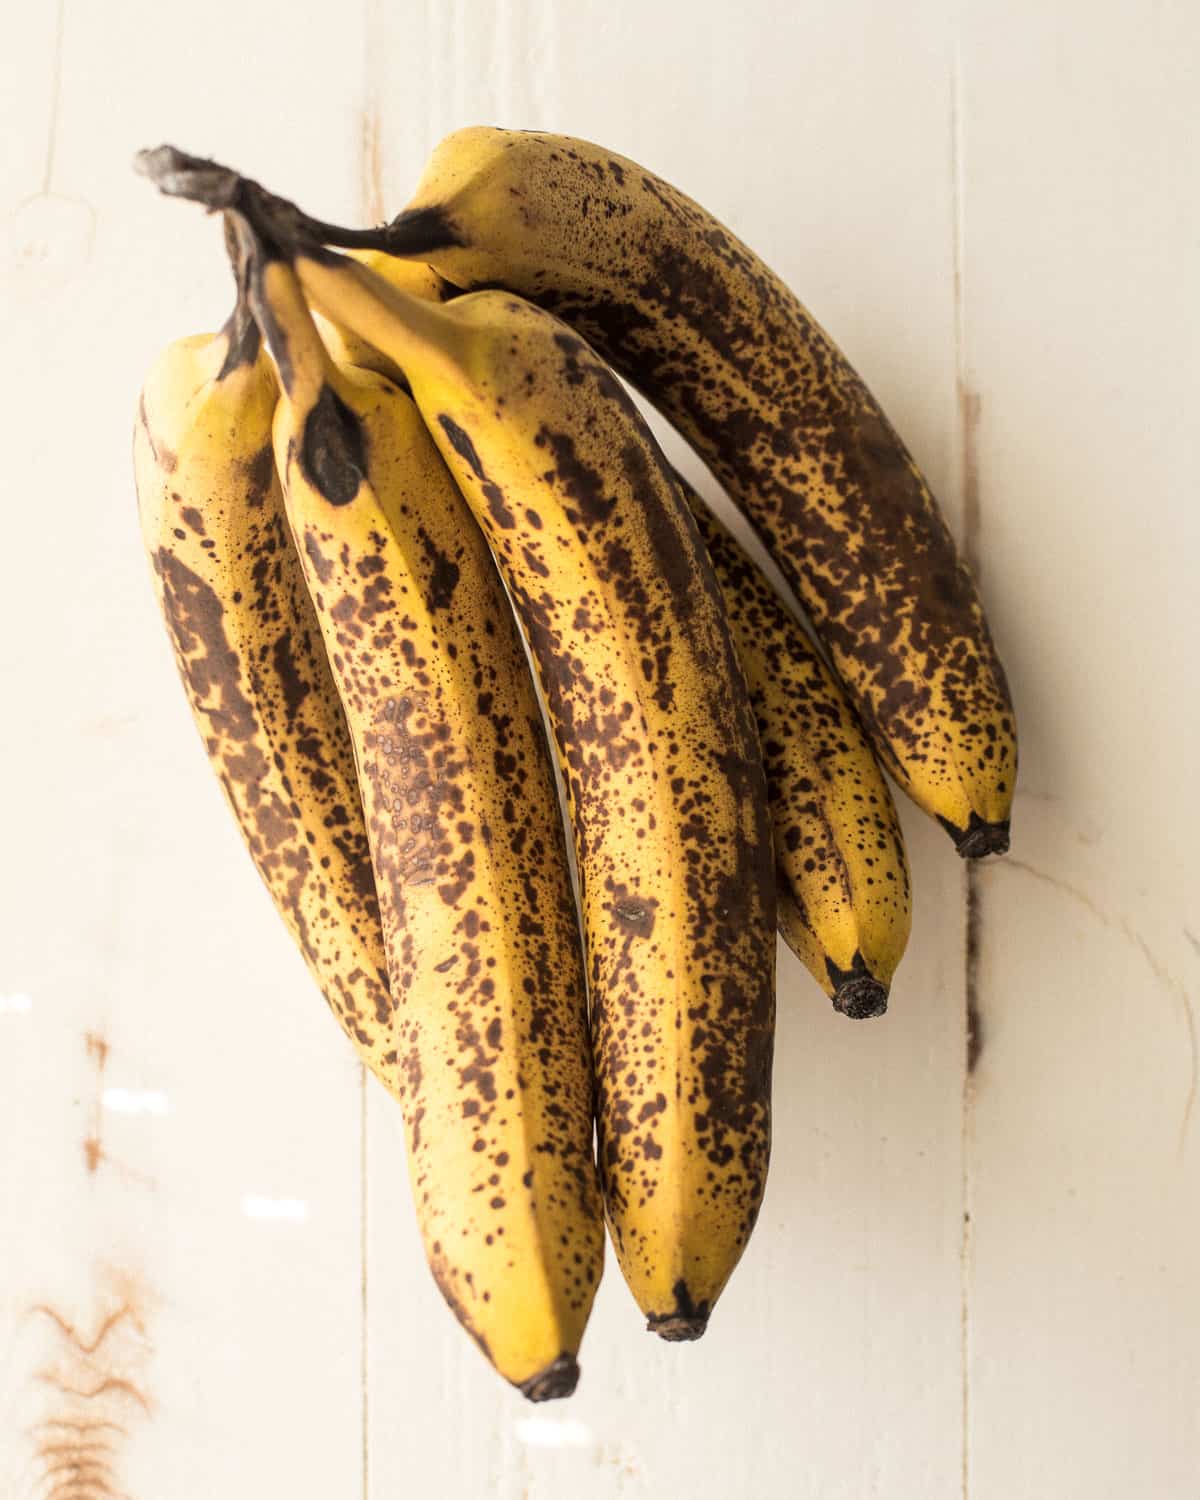 ripe bananas for banana bread